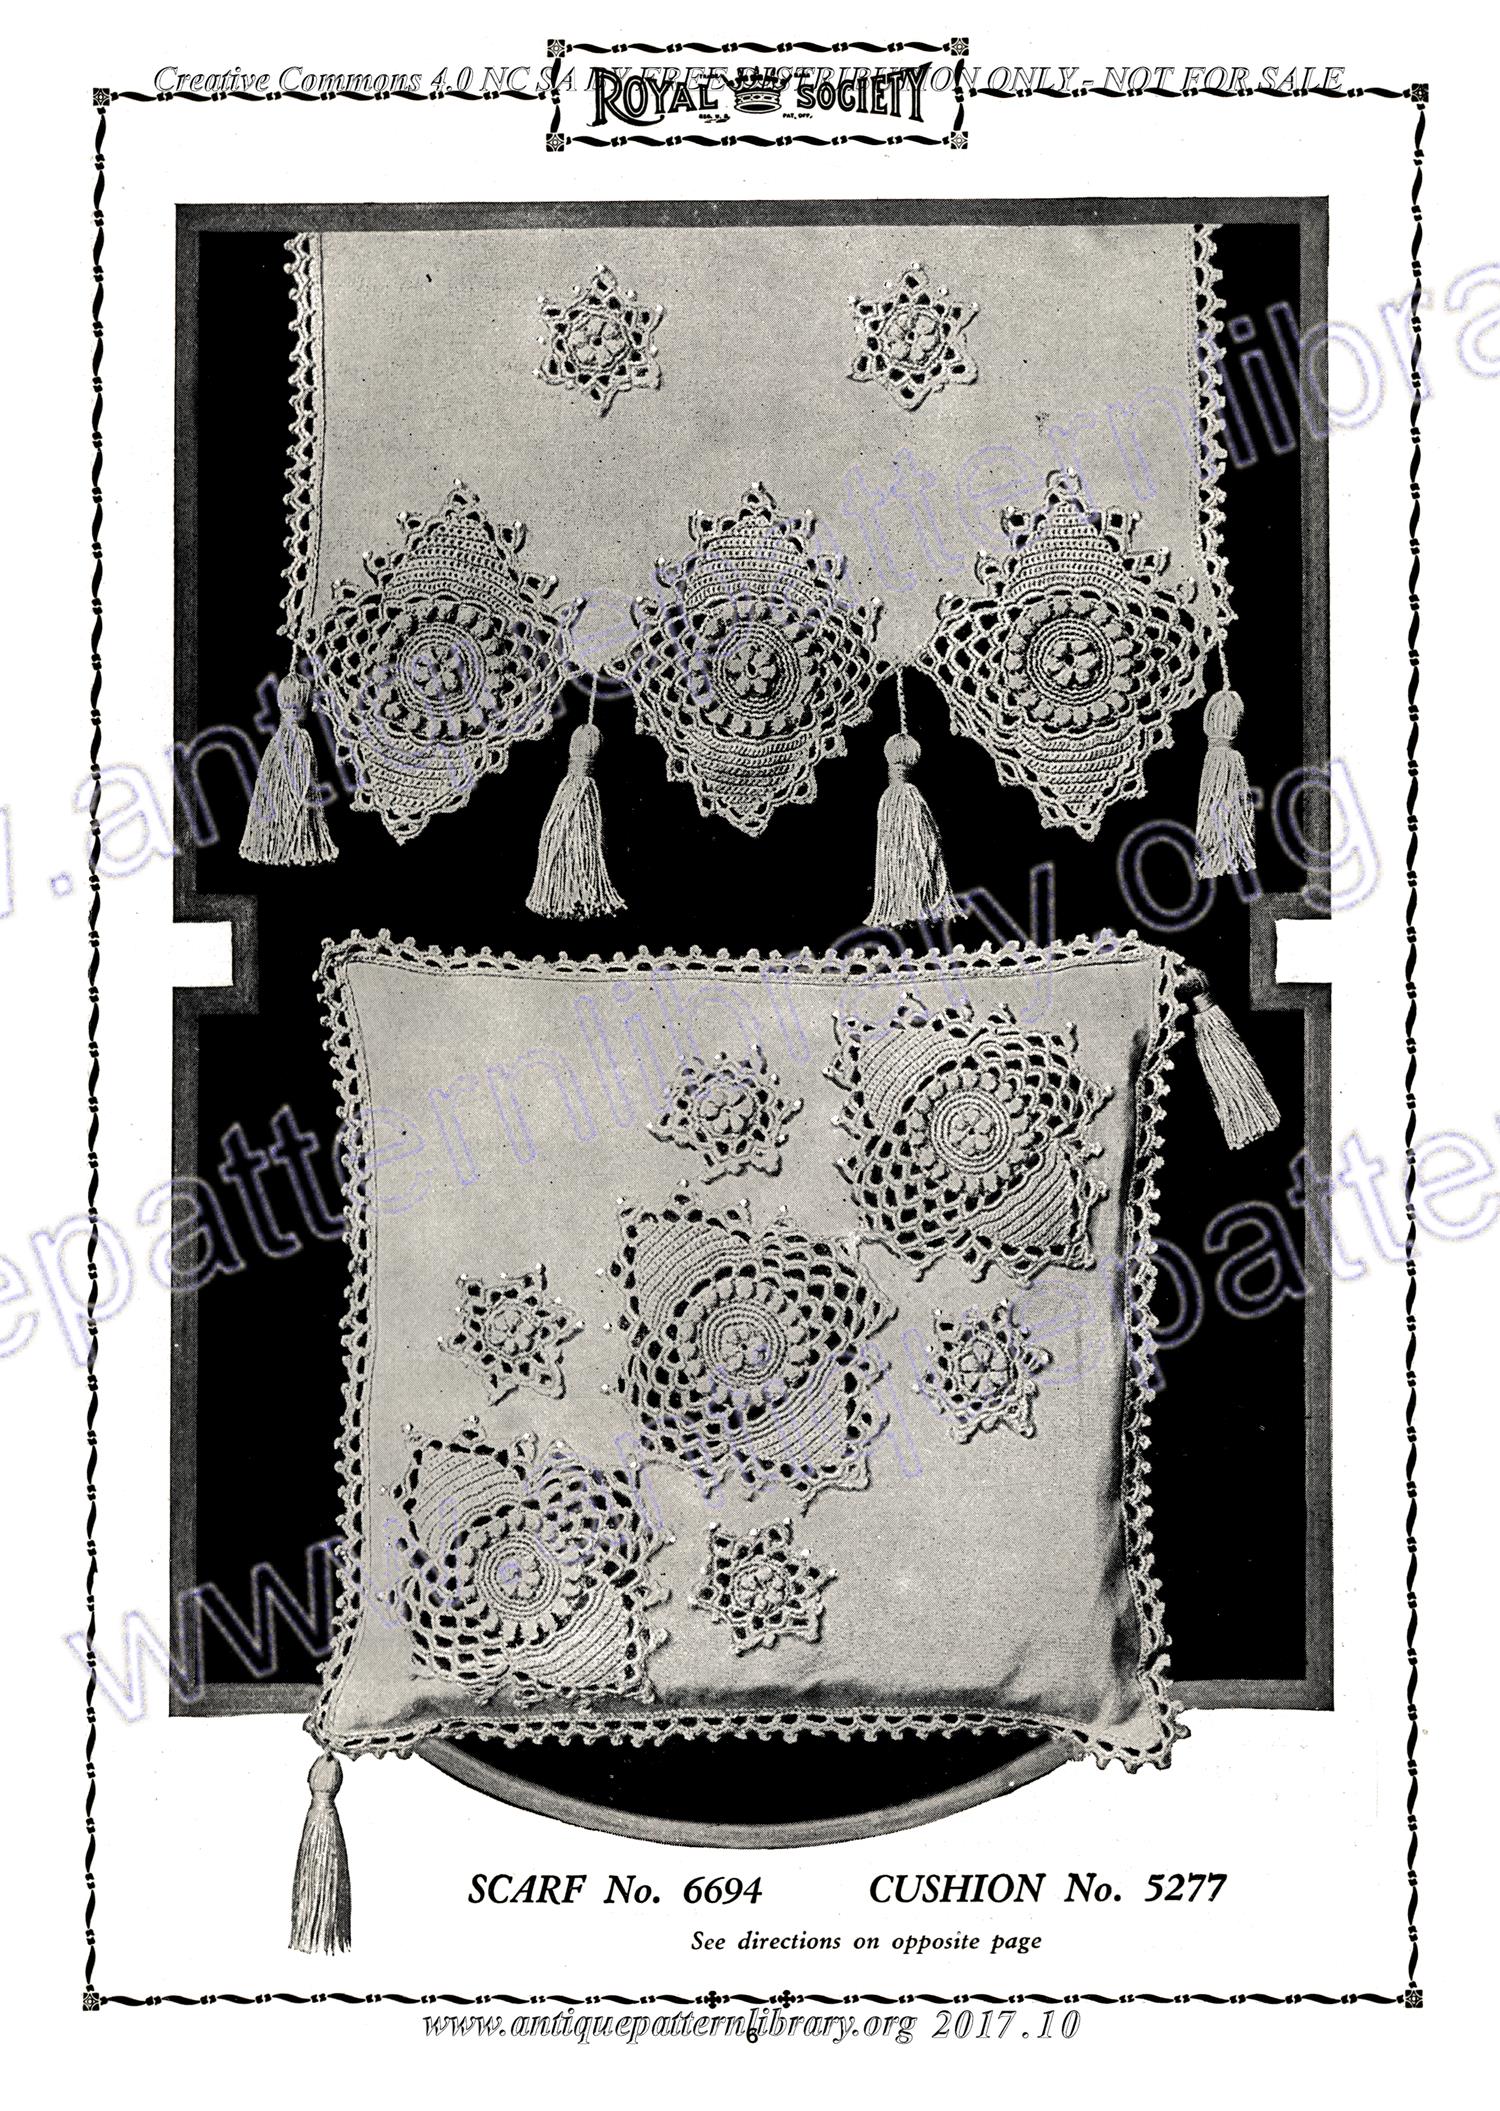 D-SW011 Royal Society Crochet No. 14 Knitting